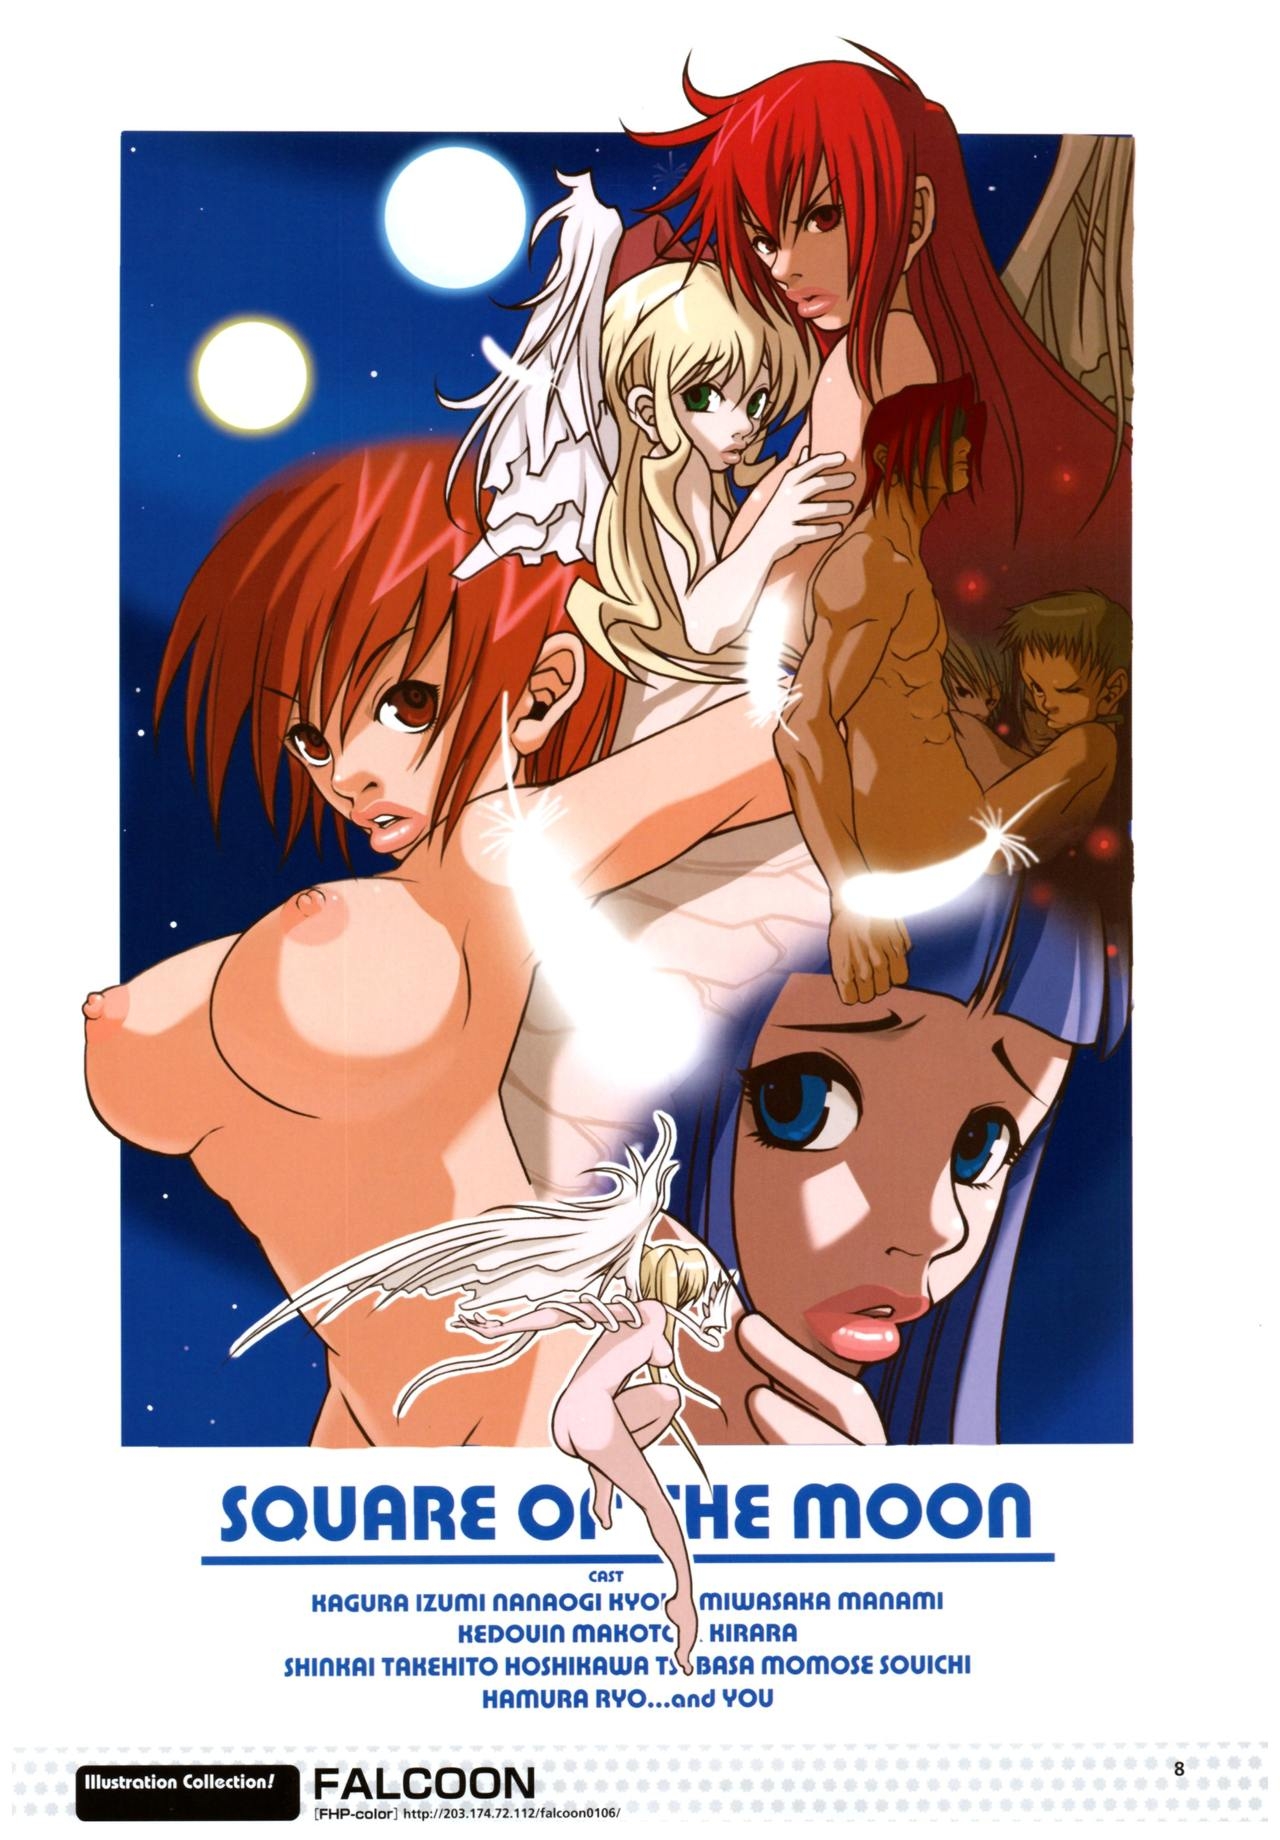 Yoru Ga Kuru! Square Of The Moon Visual Fan Book 134